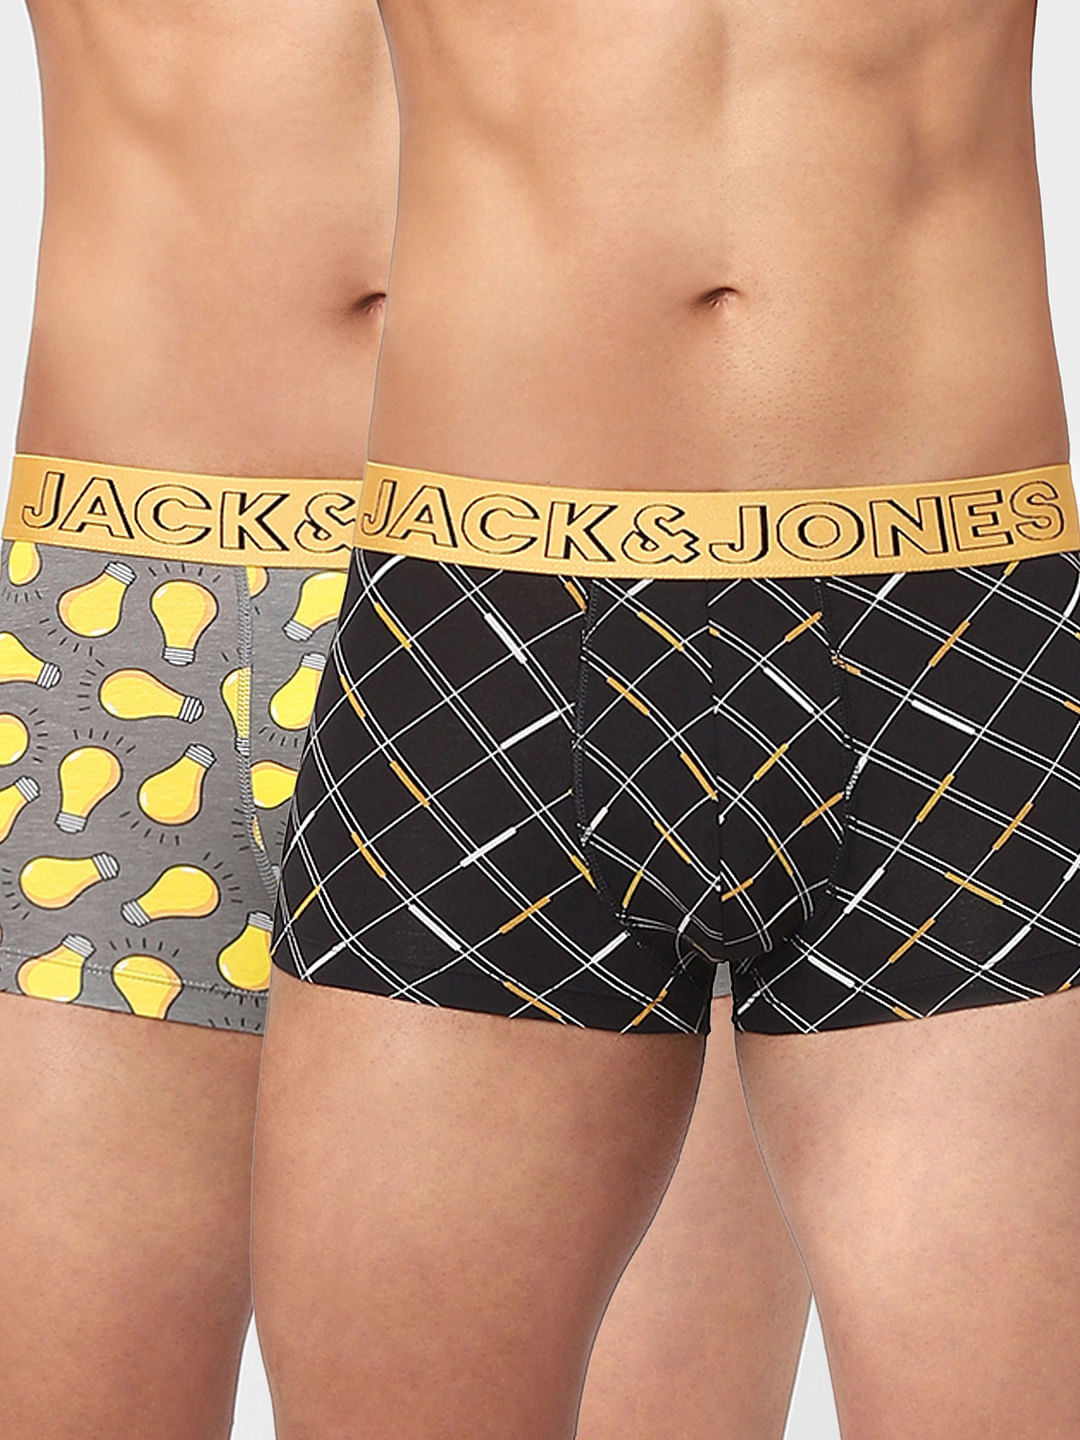 JACK & JONES TRUNKS Herren Retroshorts Boxershorts Jack and Jones Hipster Shorts 